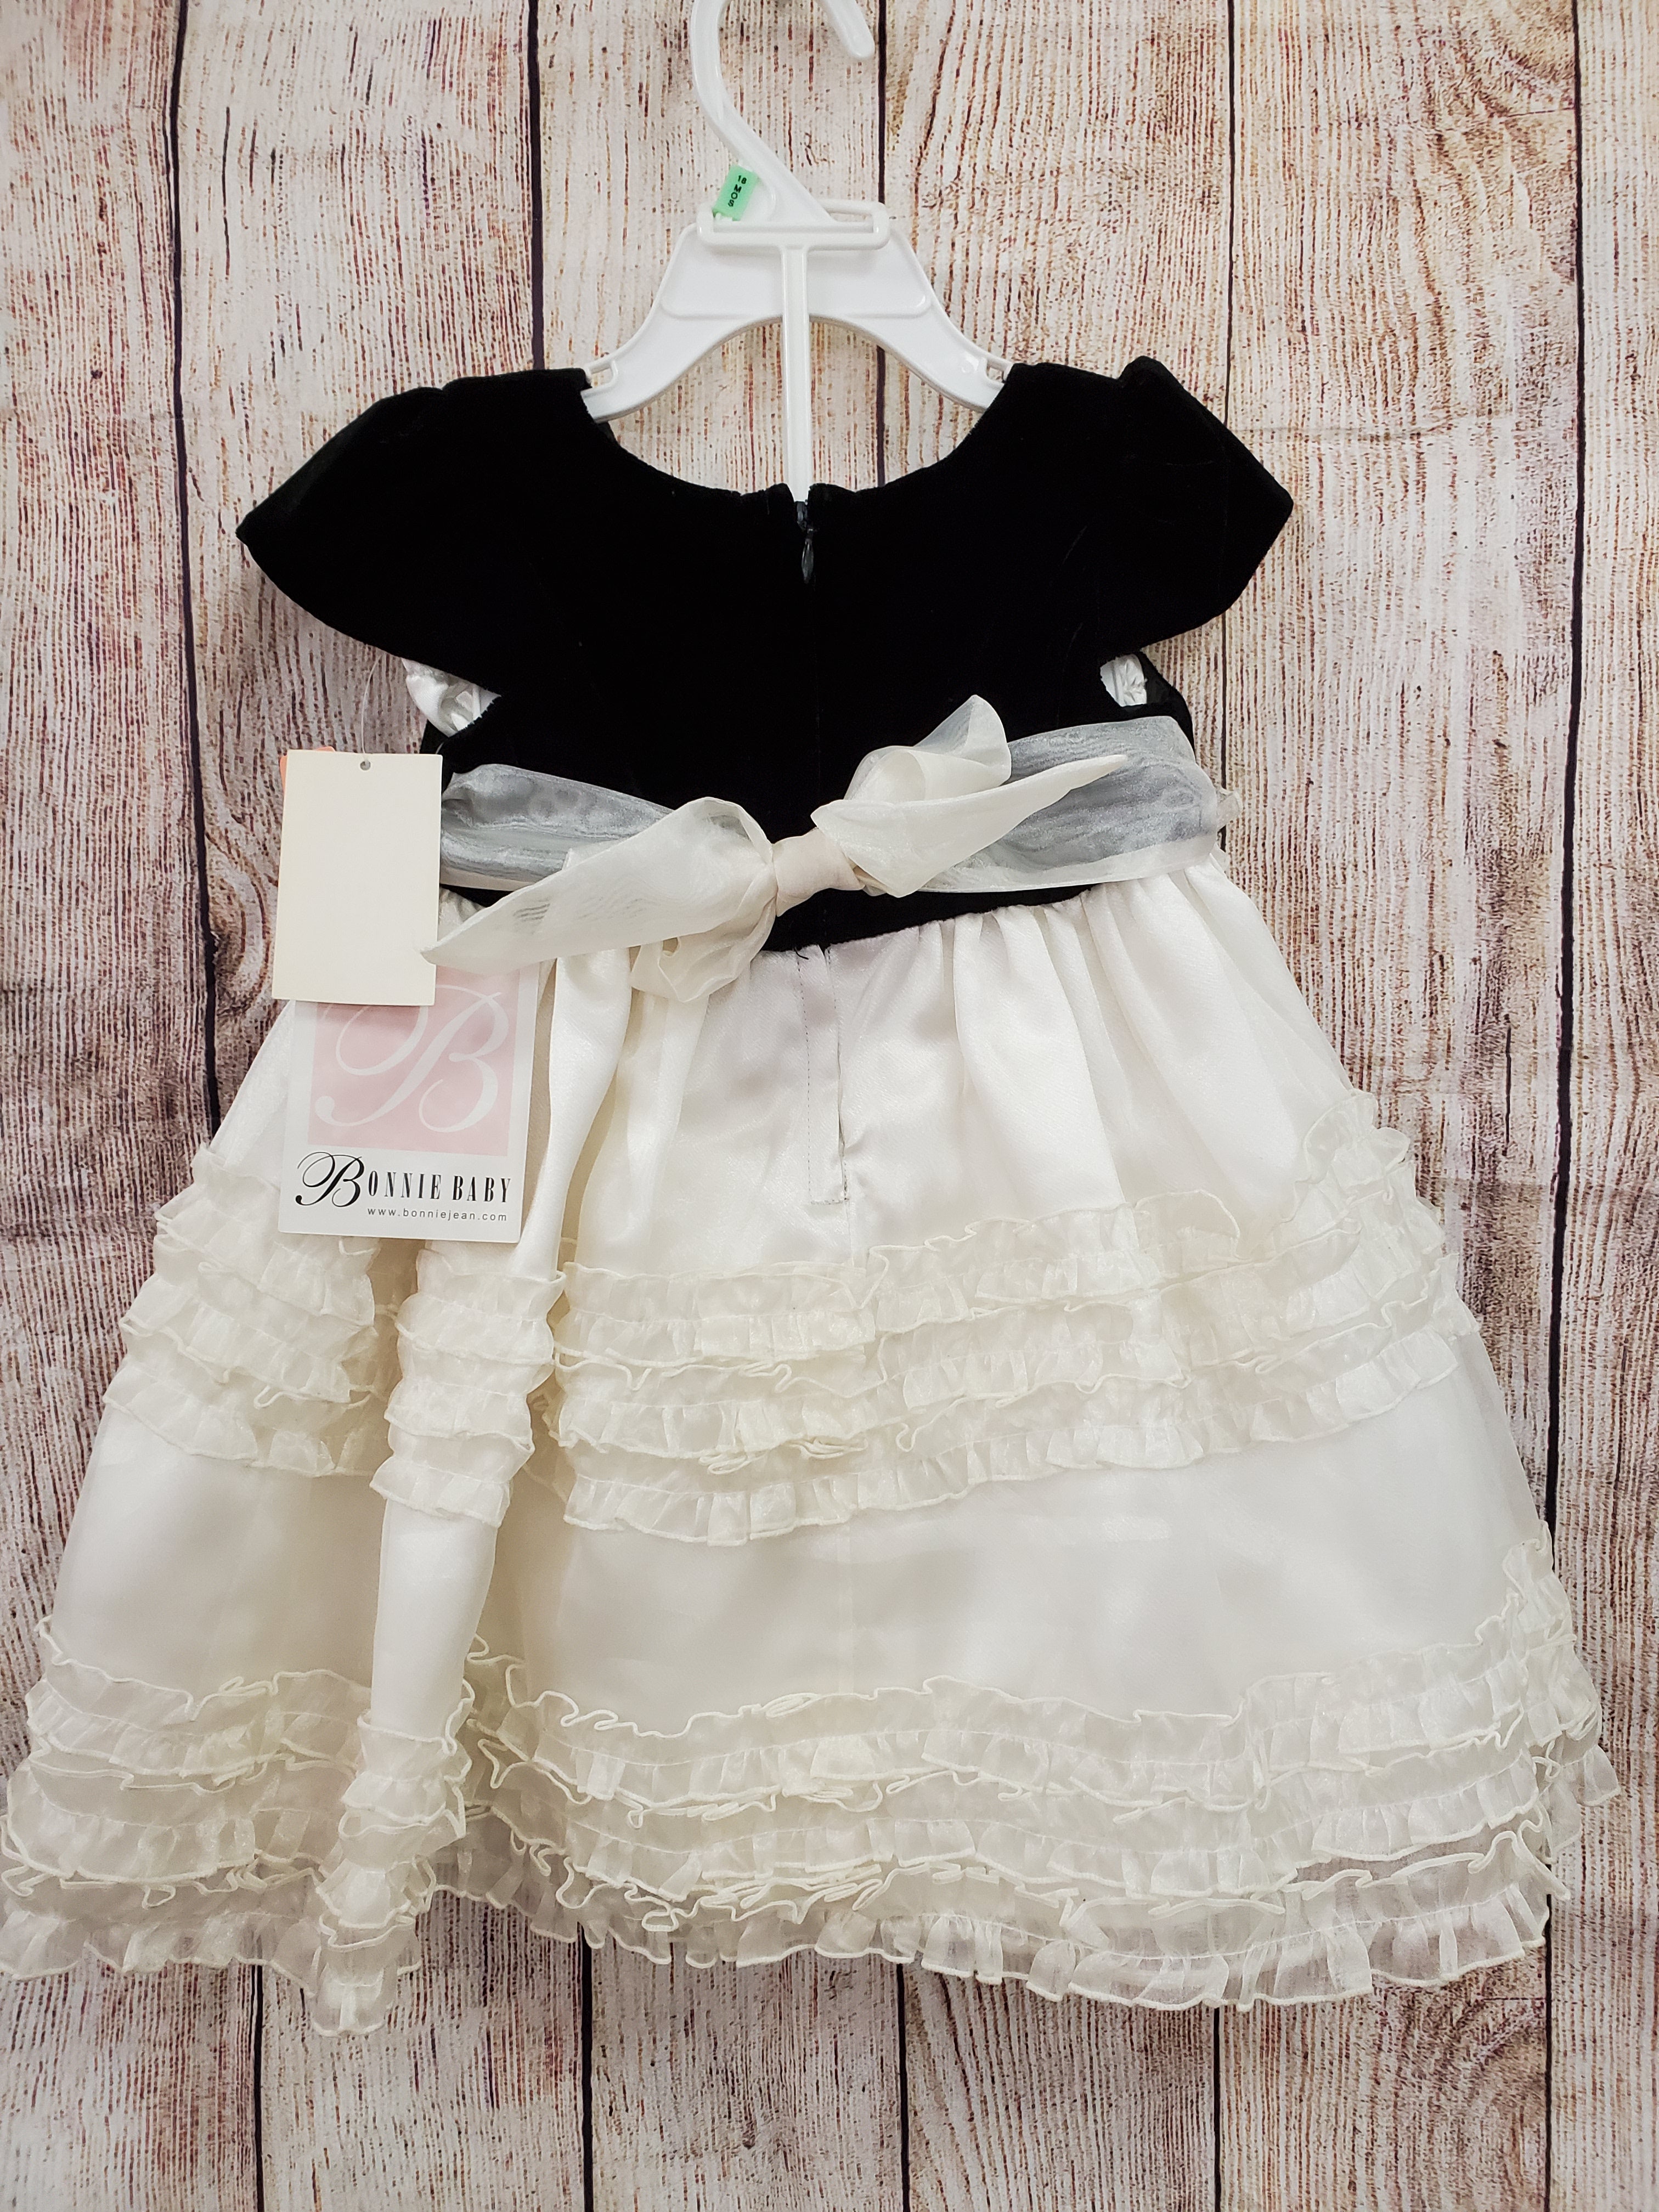 Bonnie Baby baby girls New dress black  and white 18m